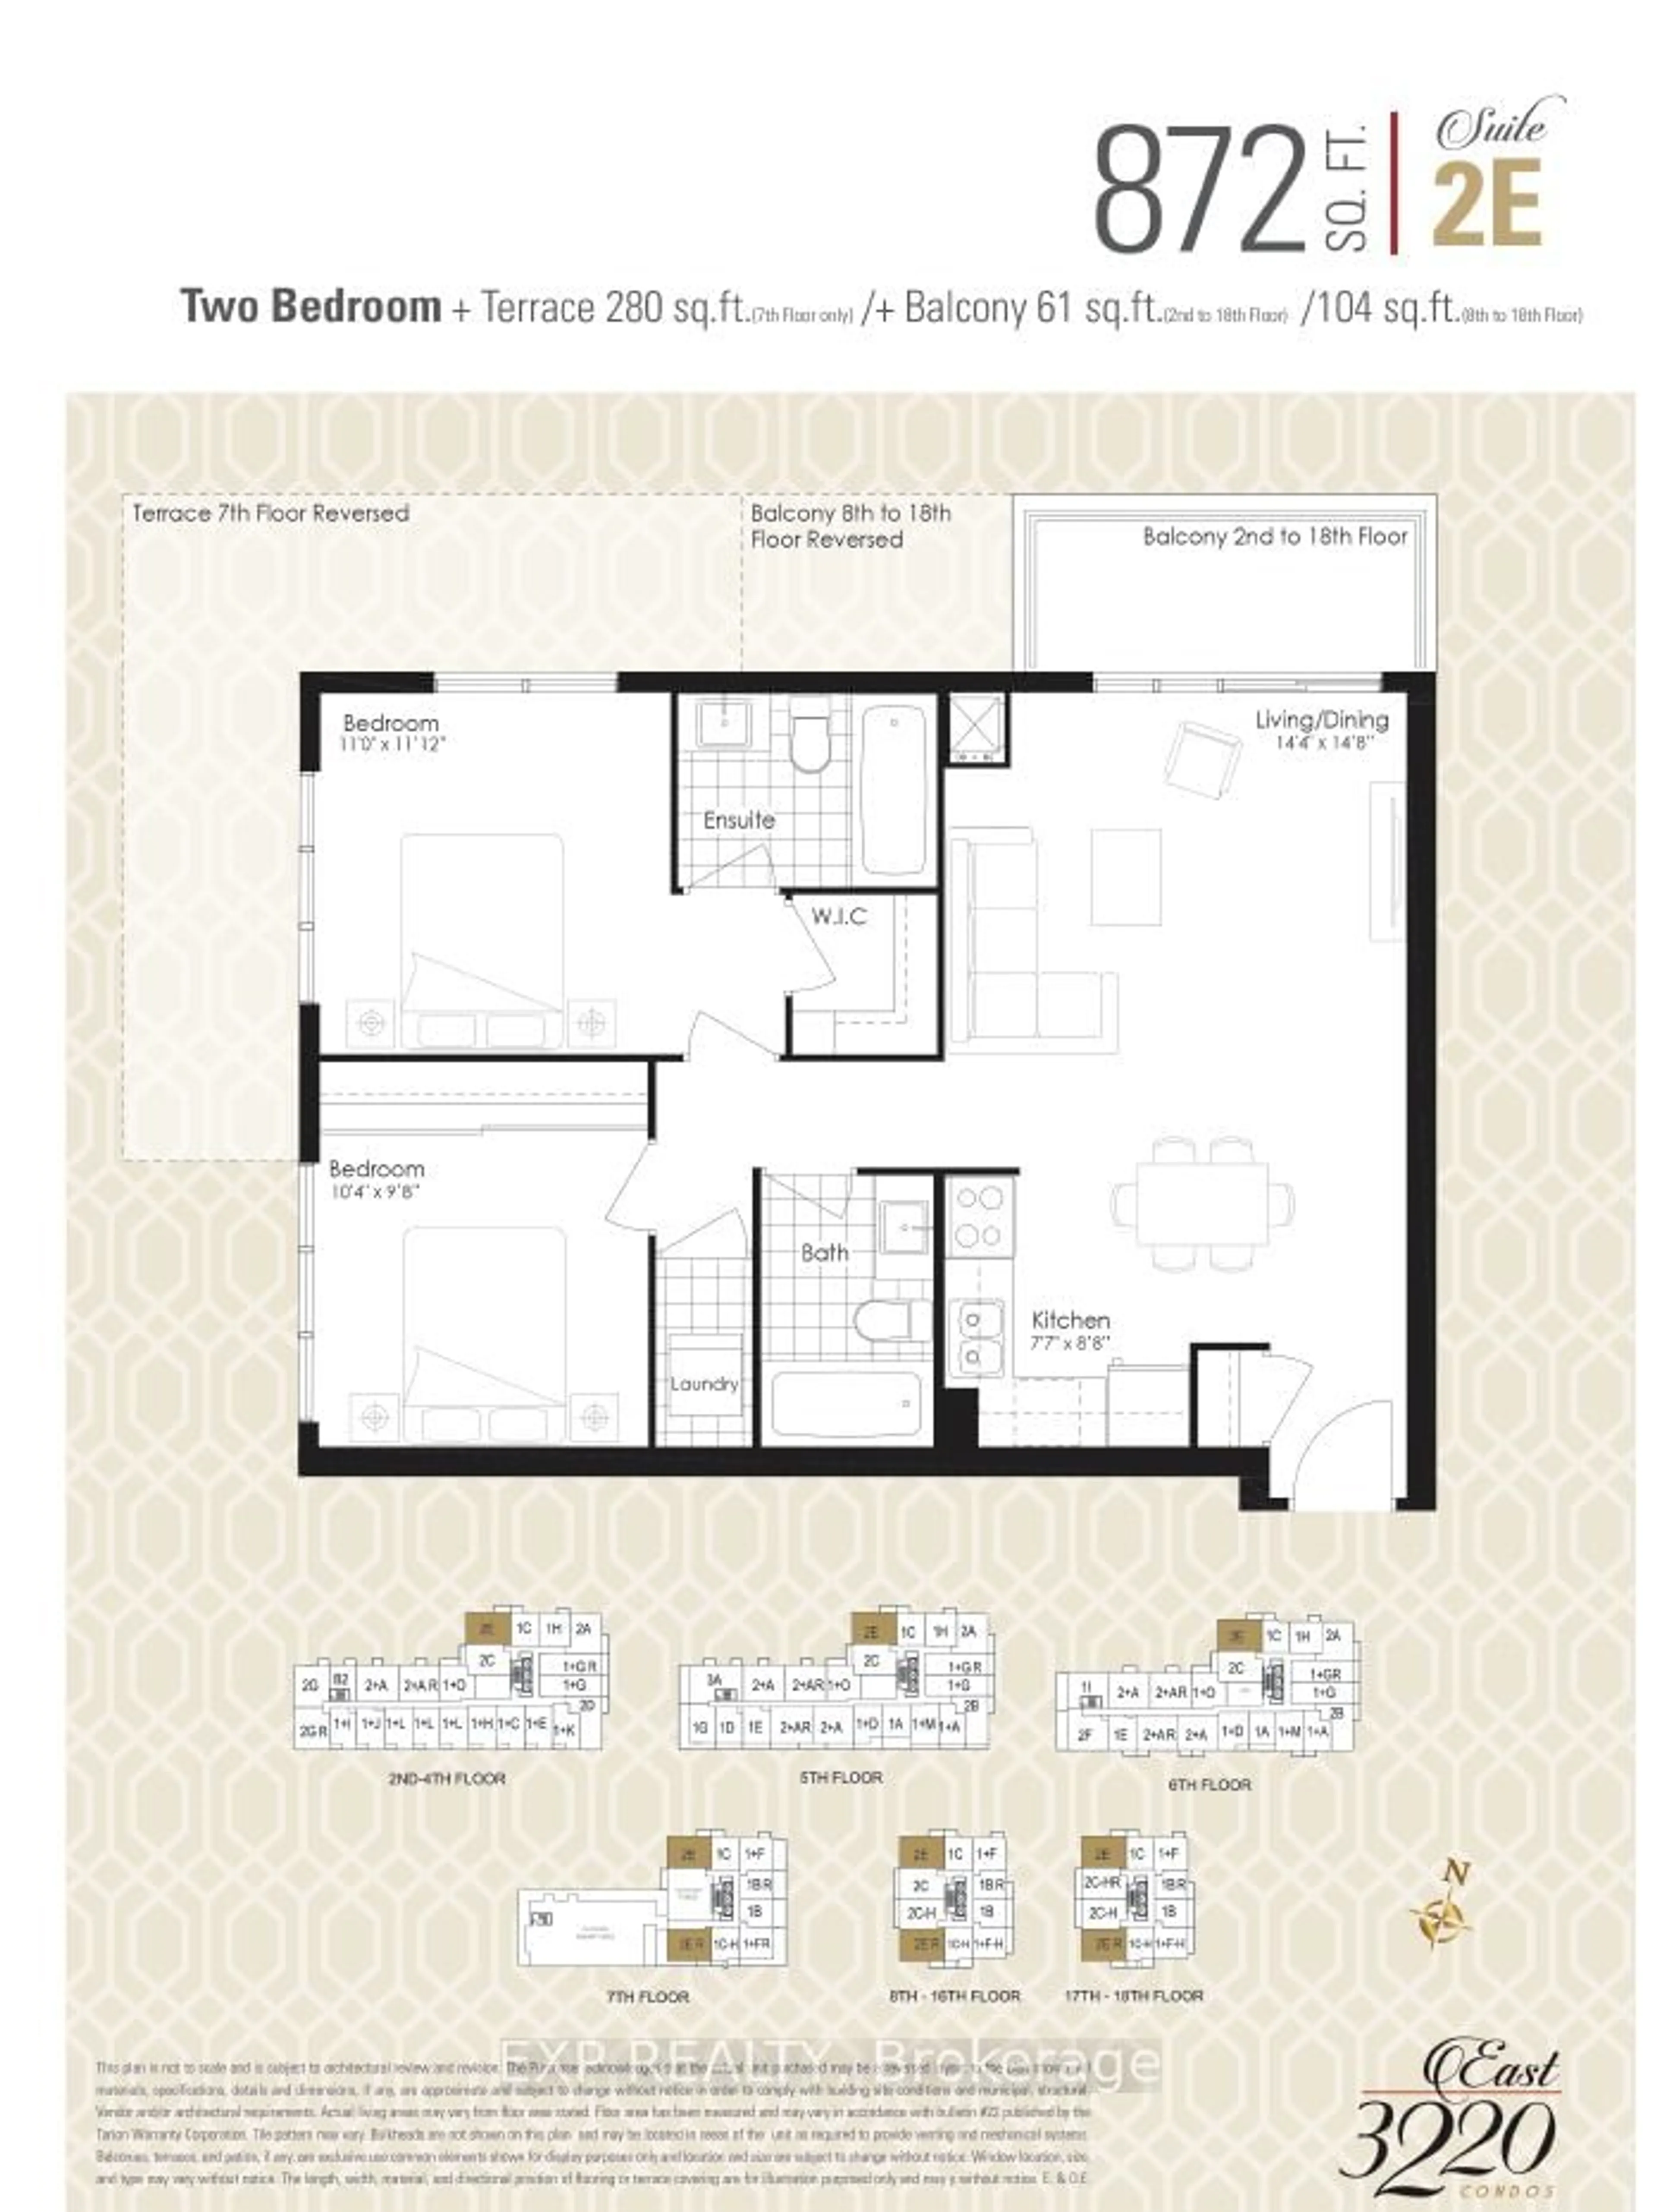 Floor plan for 3220 Sheppard Ave #701, Toronto Ontario M1T 0B7